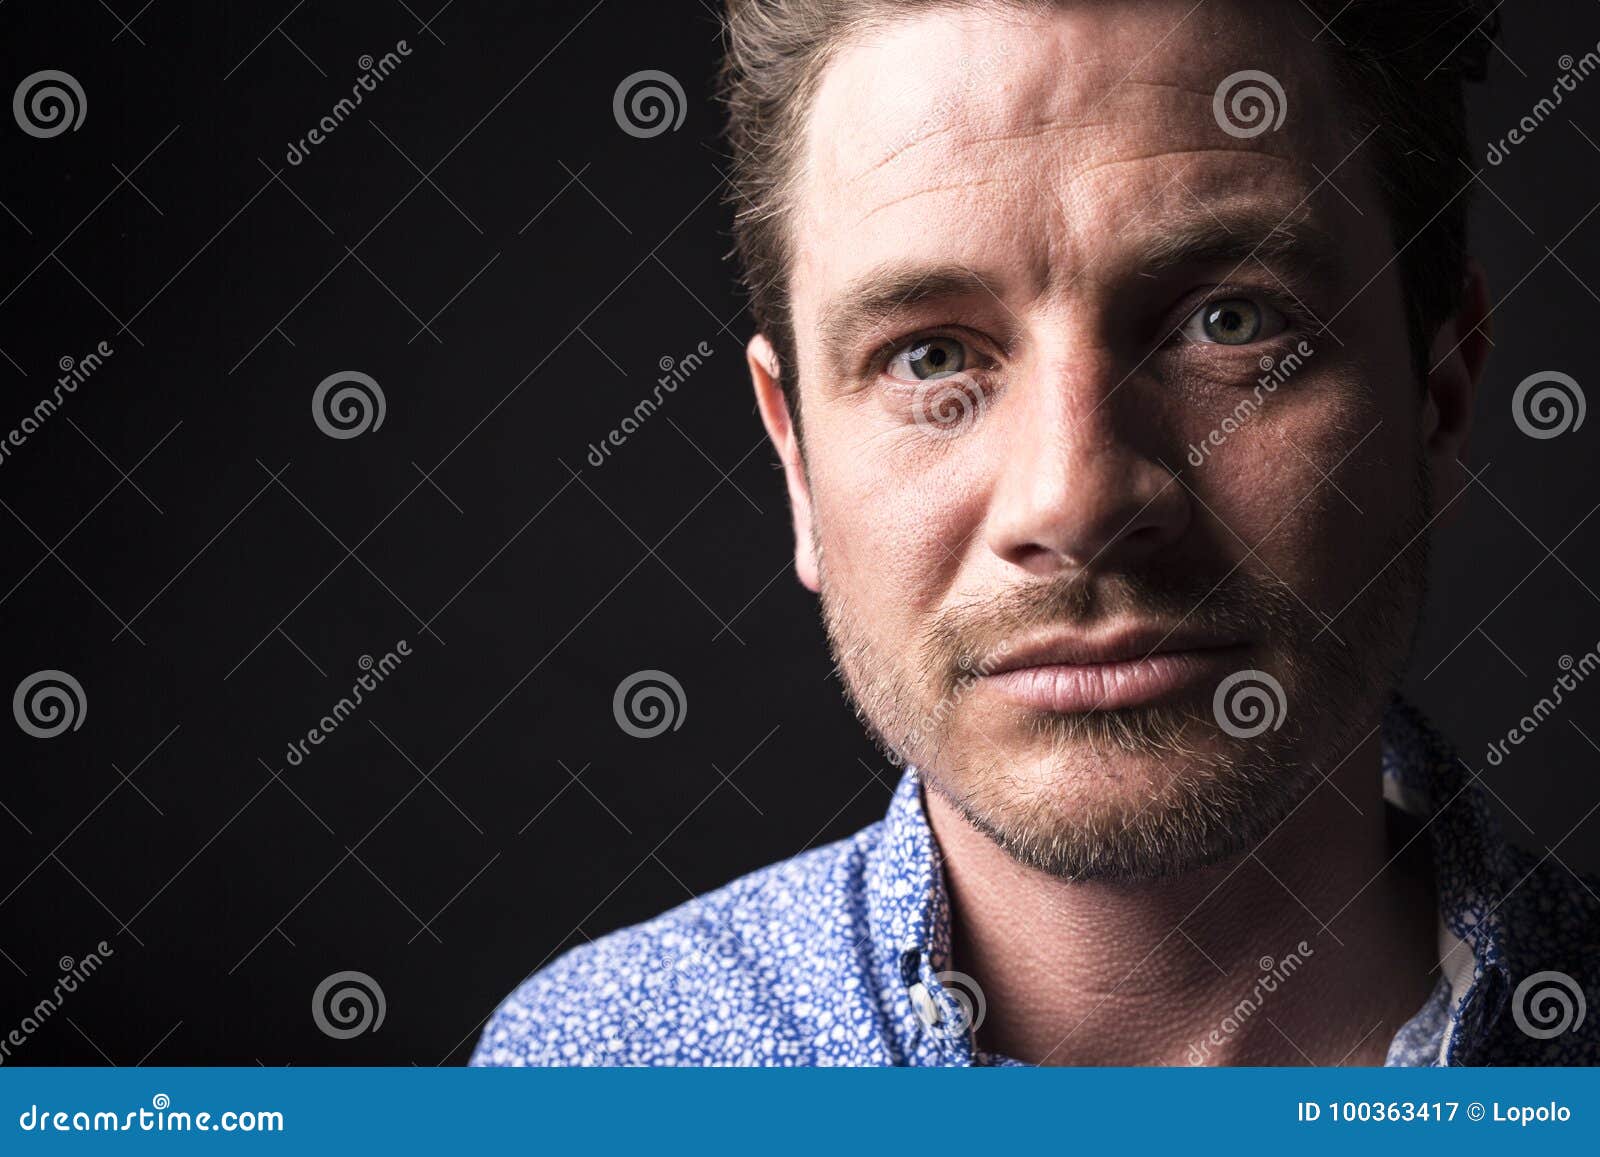 Closeup Portrait Of Confident Man On Black Background. Stock Image ...